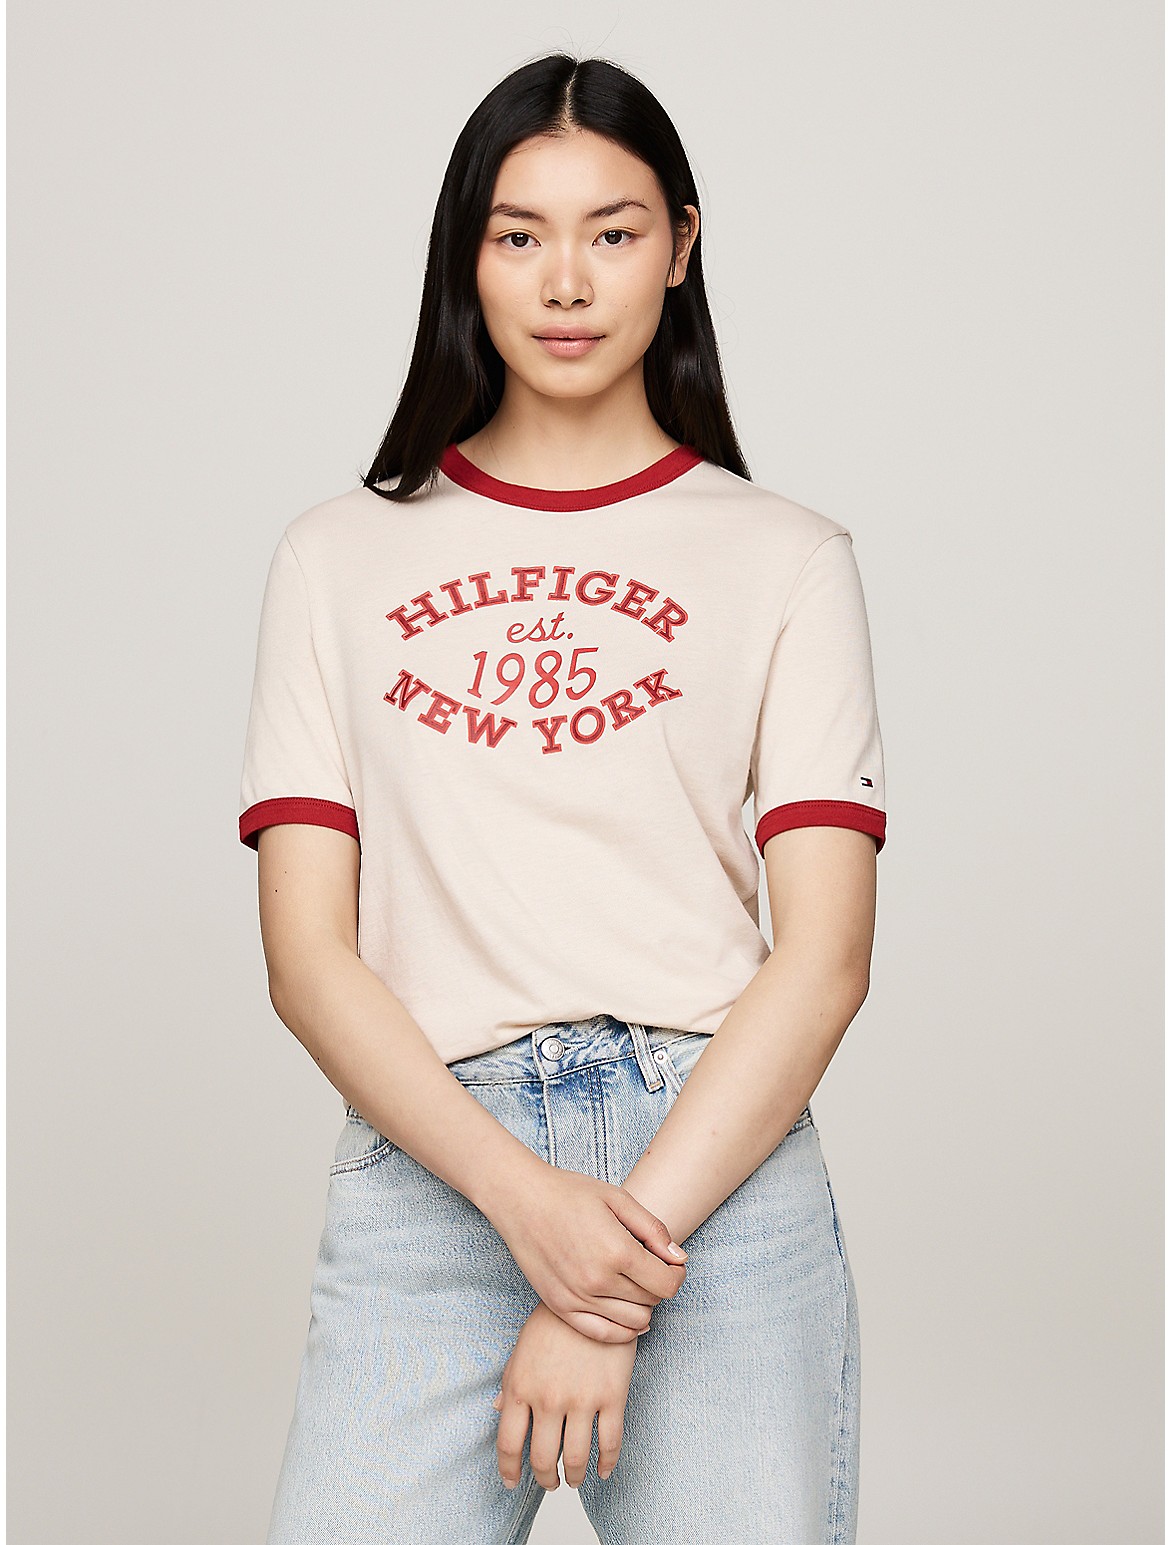 Tommy Hilfiger Women's New York Varsity Ringer T-Shirt